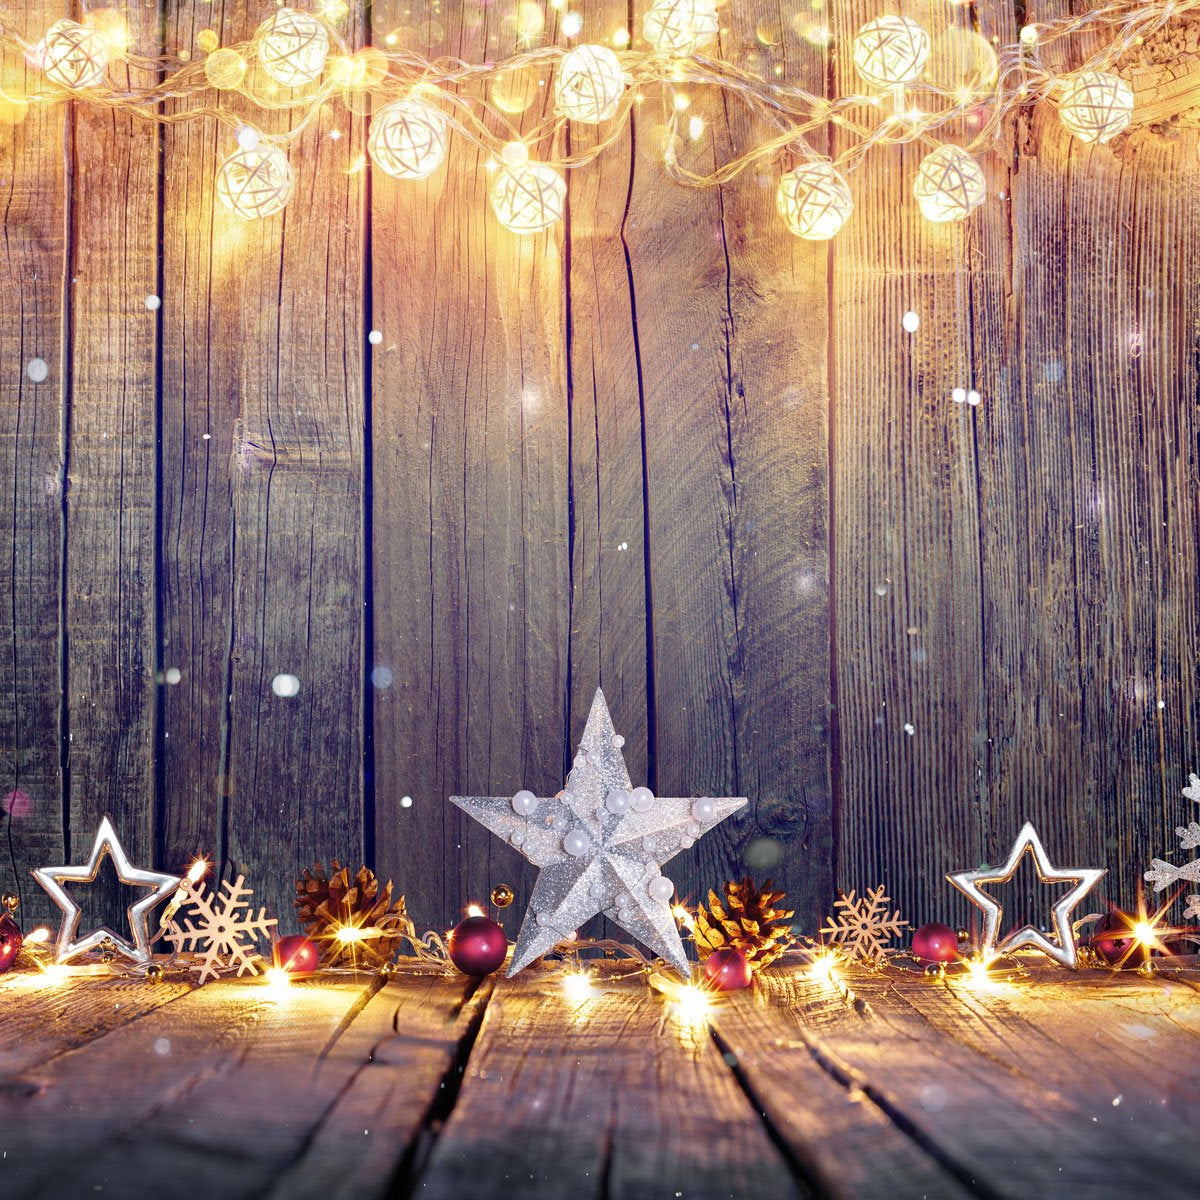 Kate Bokeh Glitter Wood Floor backdrop for Christmas photography